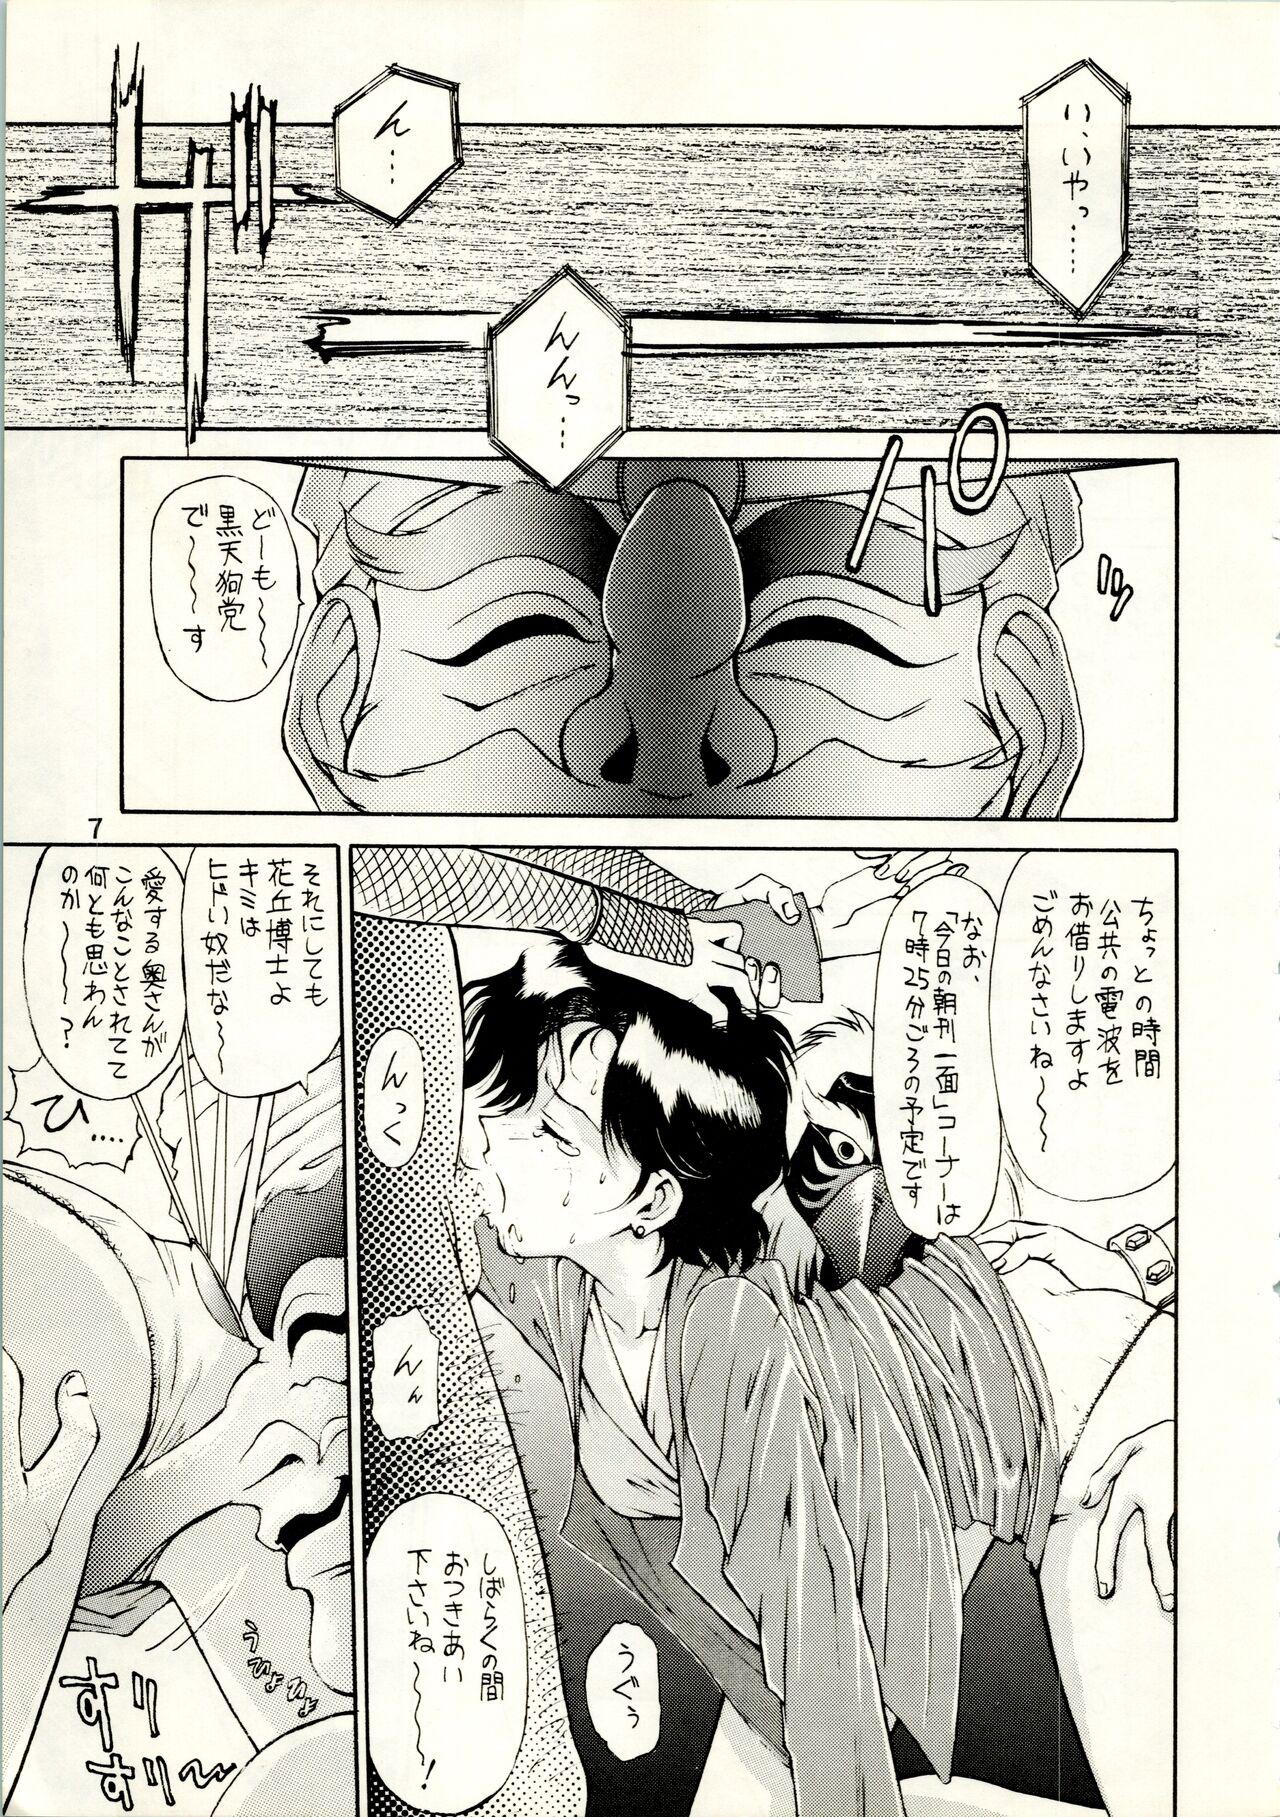 Swallowing POTATO MASHER 8 - Tobe isami | soar high isami Hiddencam - Page 7